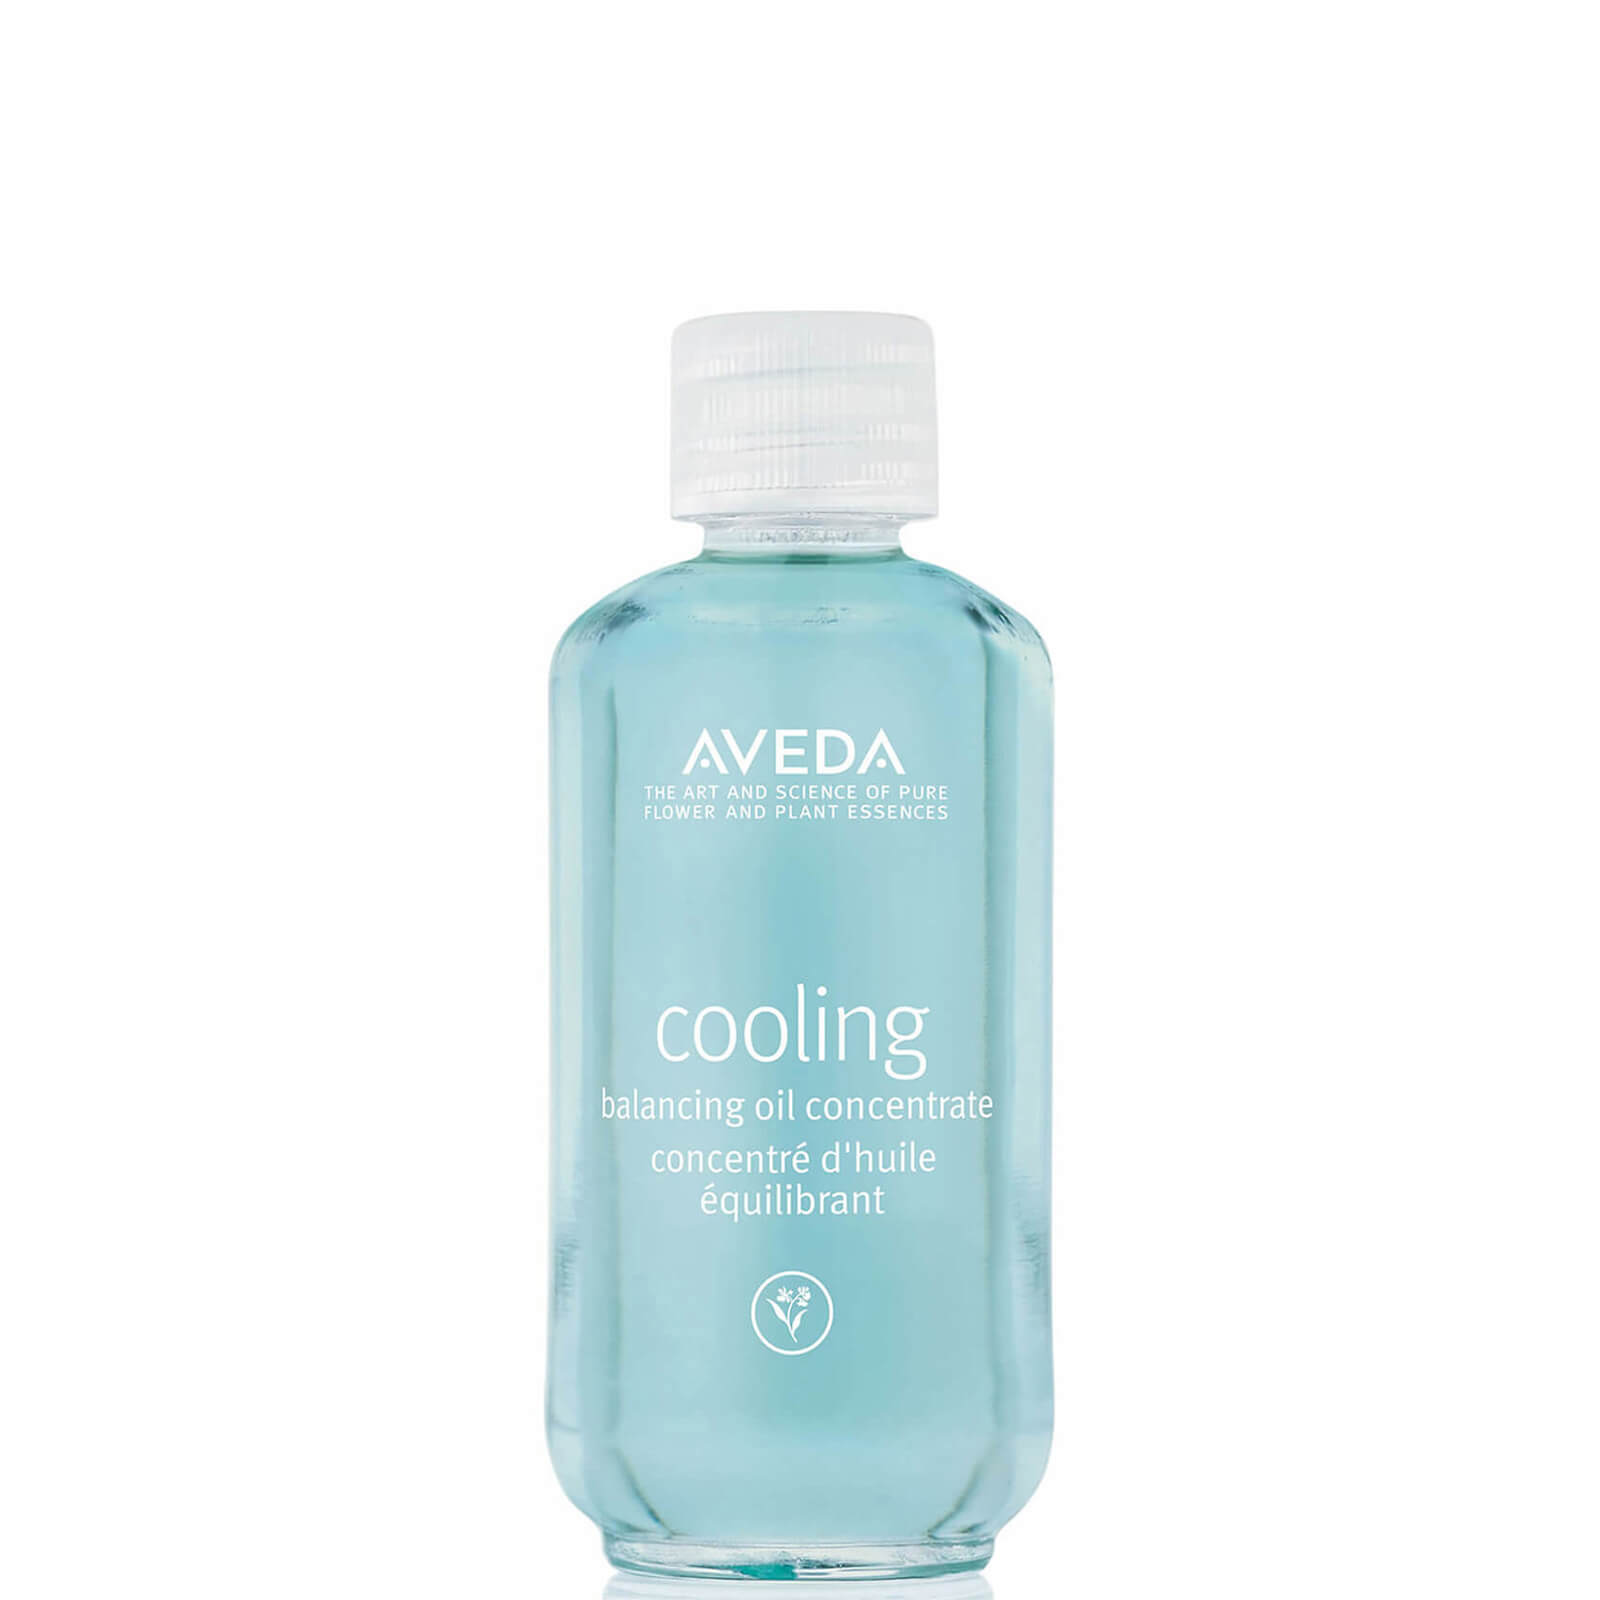 Aceite Cooling de Aveda